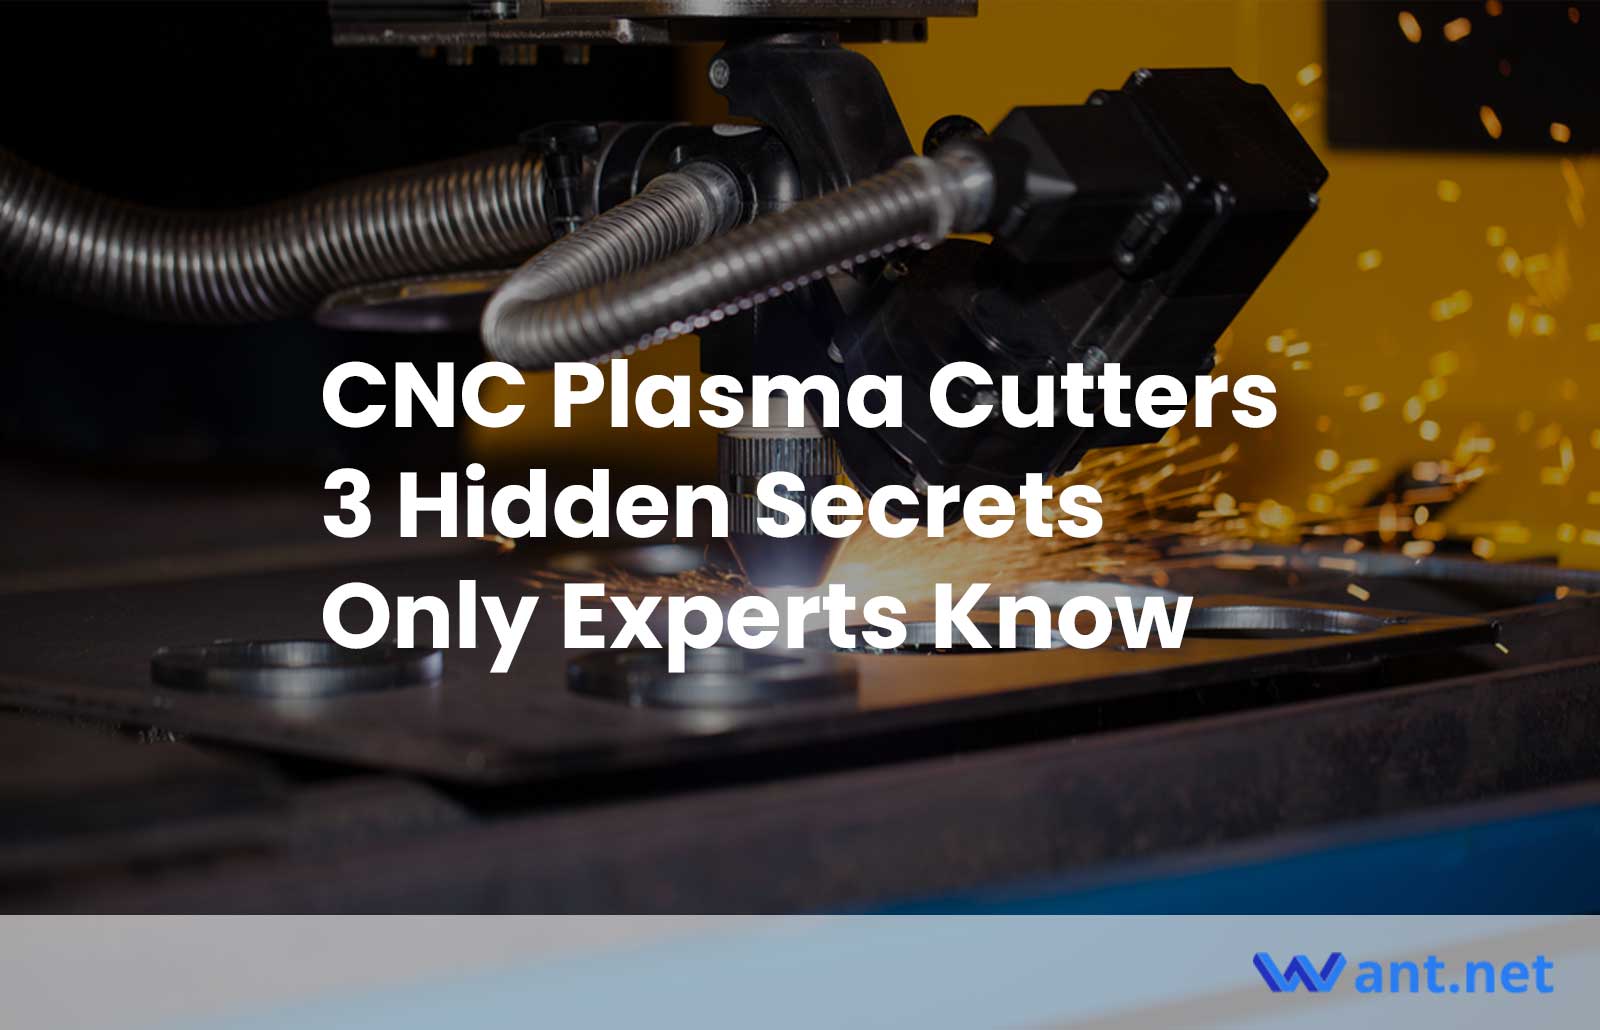 cnc plasma cutters